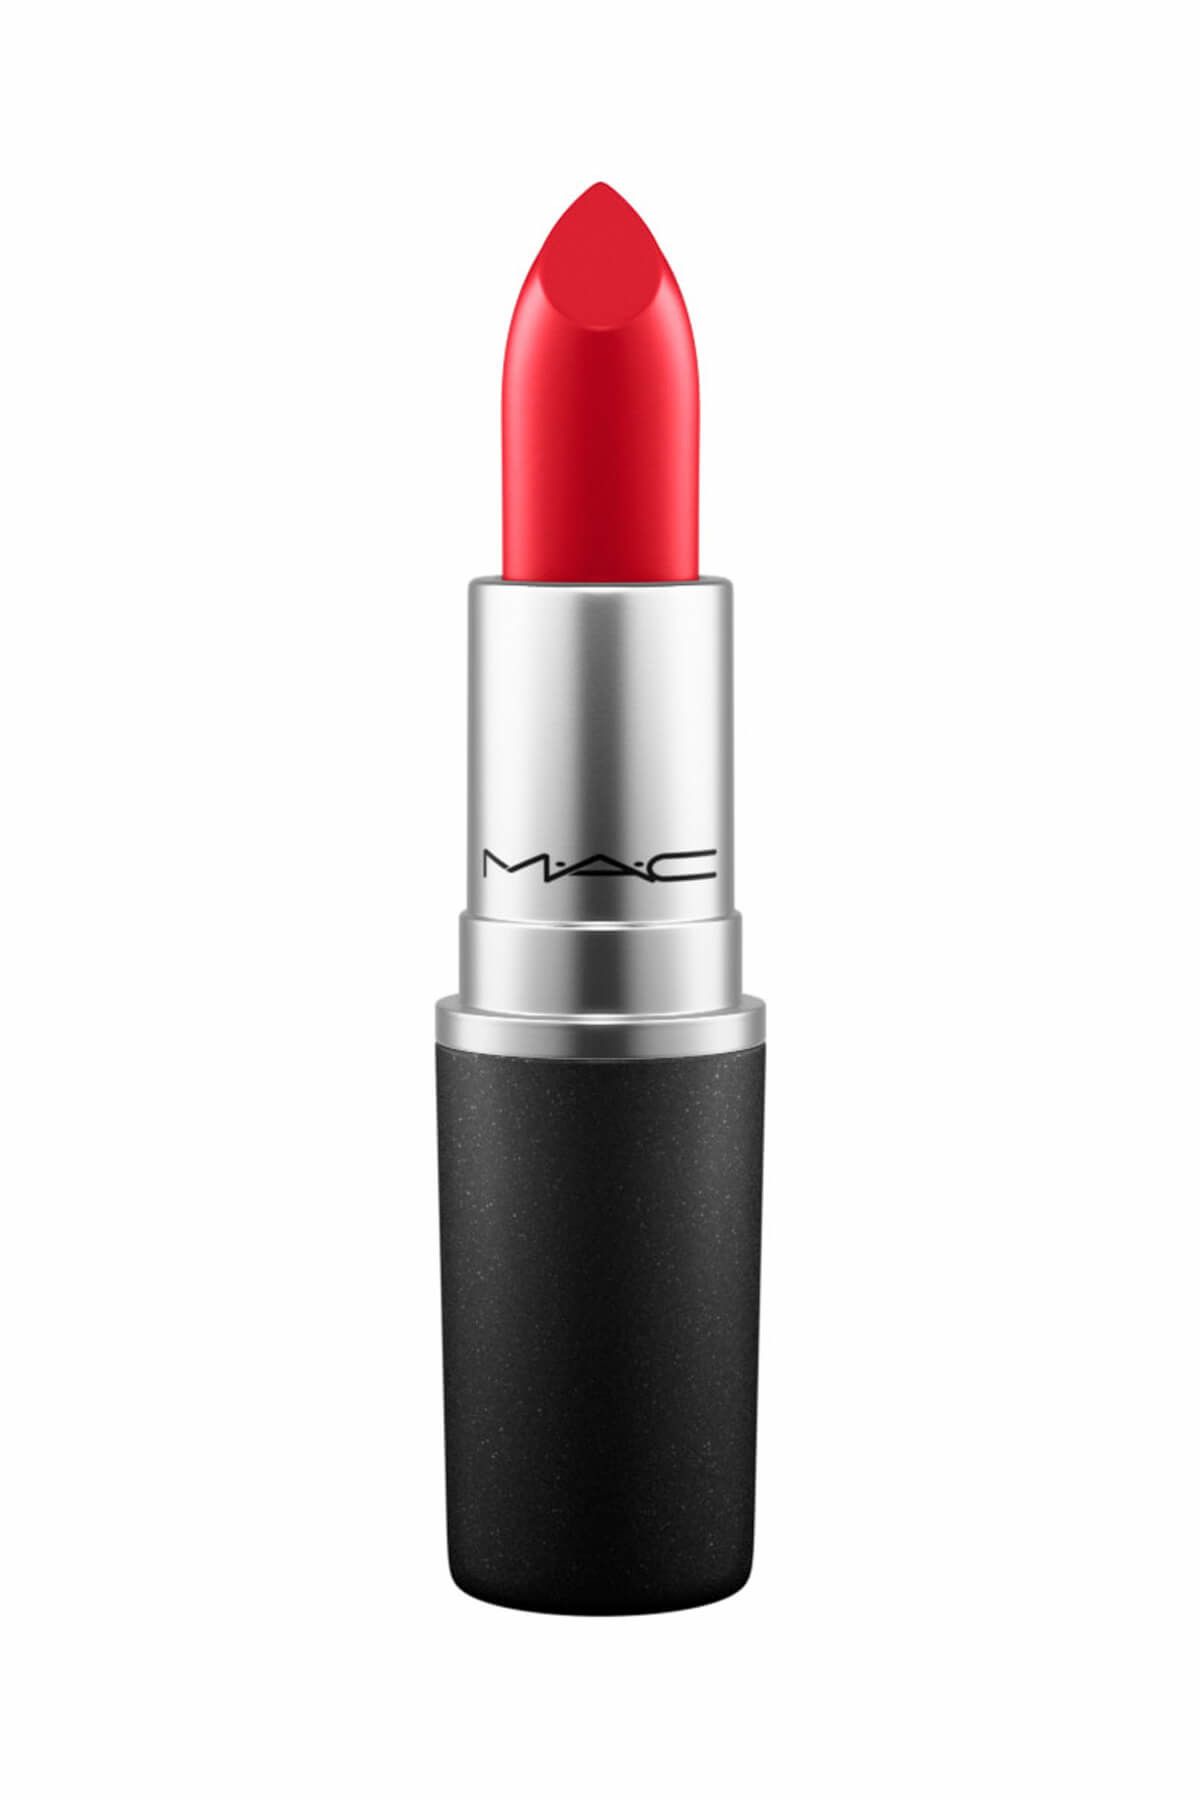 Mac Saten Ruj - Satin Lipstick Mac Red 3 g 773602049158